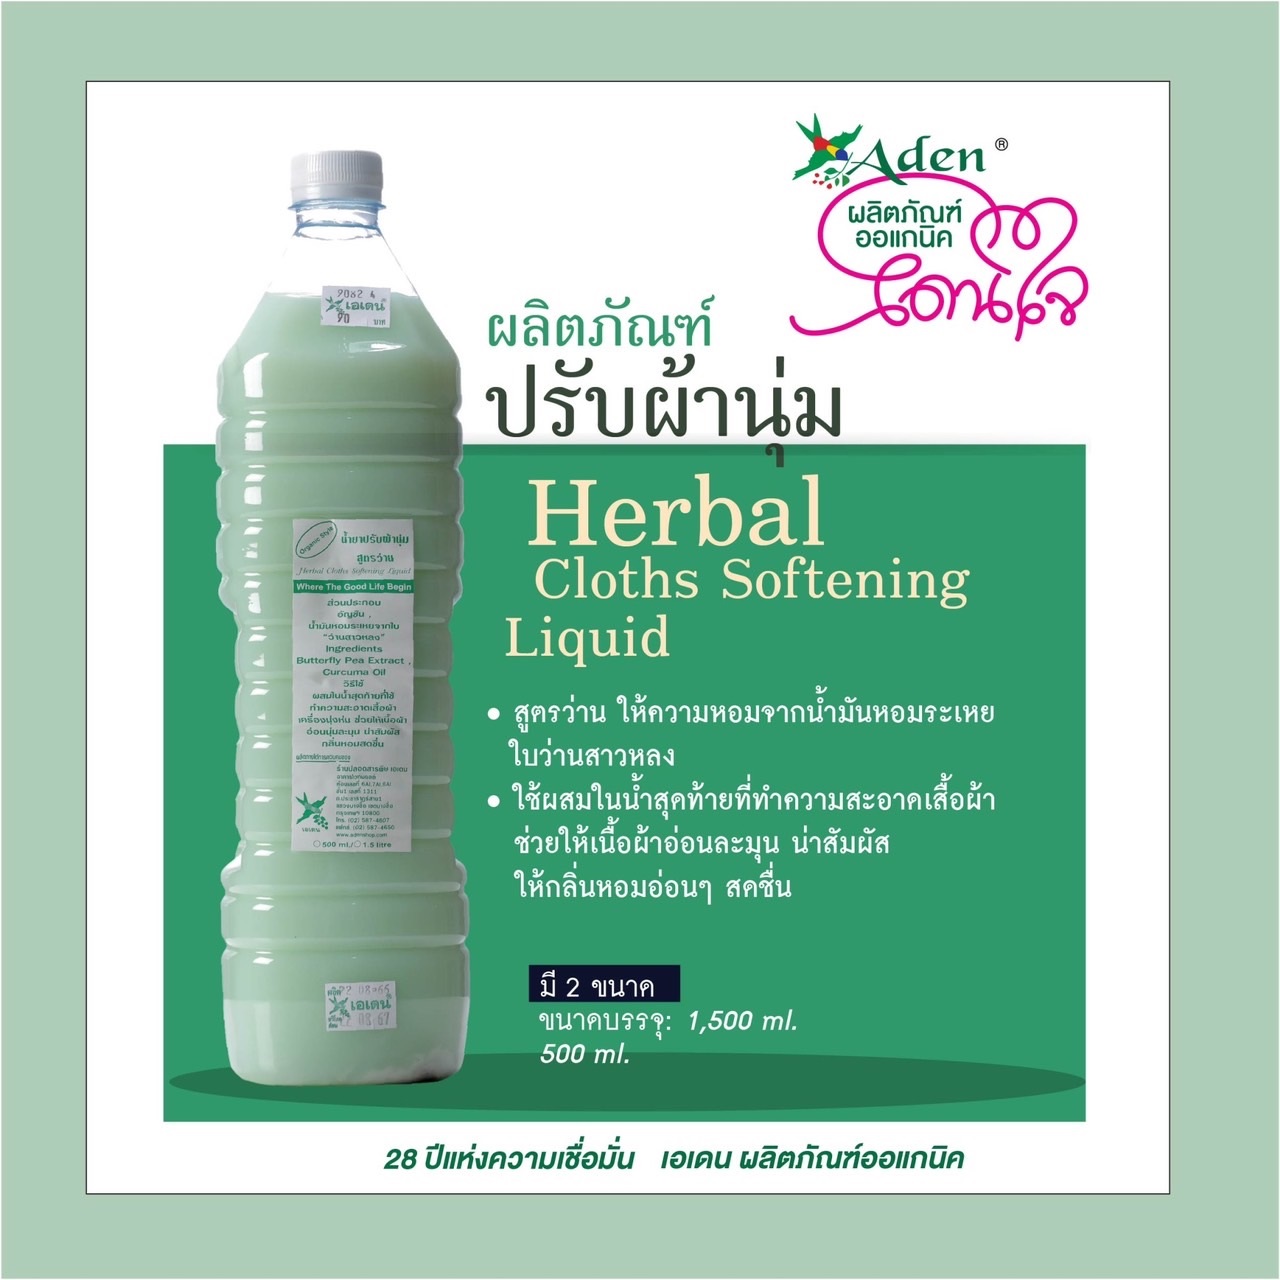 P11-0414 - : - น้ำยาปรับผ้านุ่ม  สูตรว่านสาวหลง ( Herbal cloths softening liguid-Curcuma oil formula)